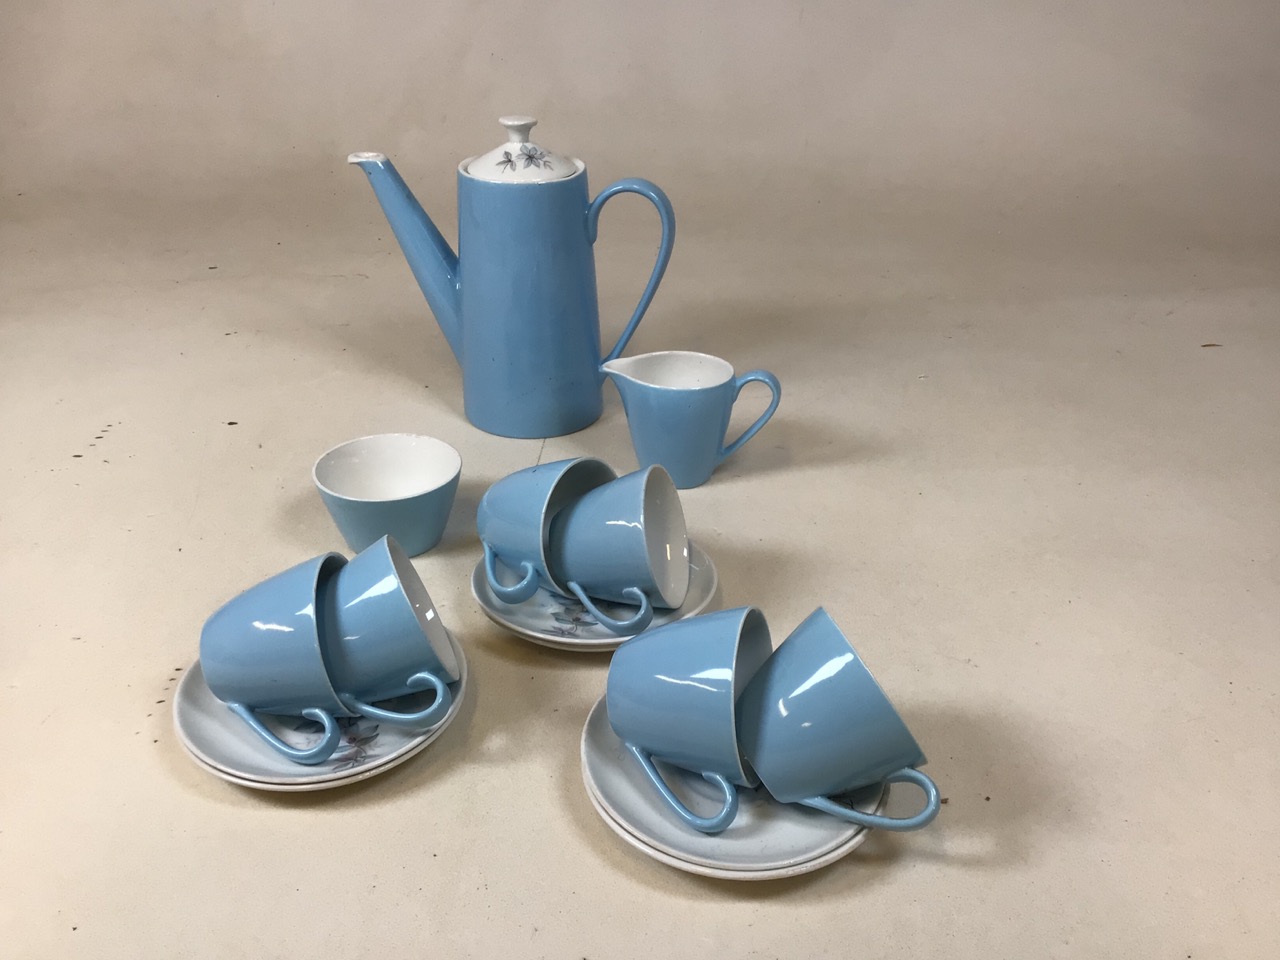 A 20 century hand painted Japanese tea set comprising teapot, jug, sugar bowls, tea plates, cups and - Bild 9 aus 9